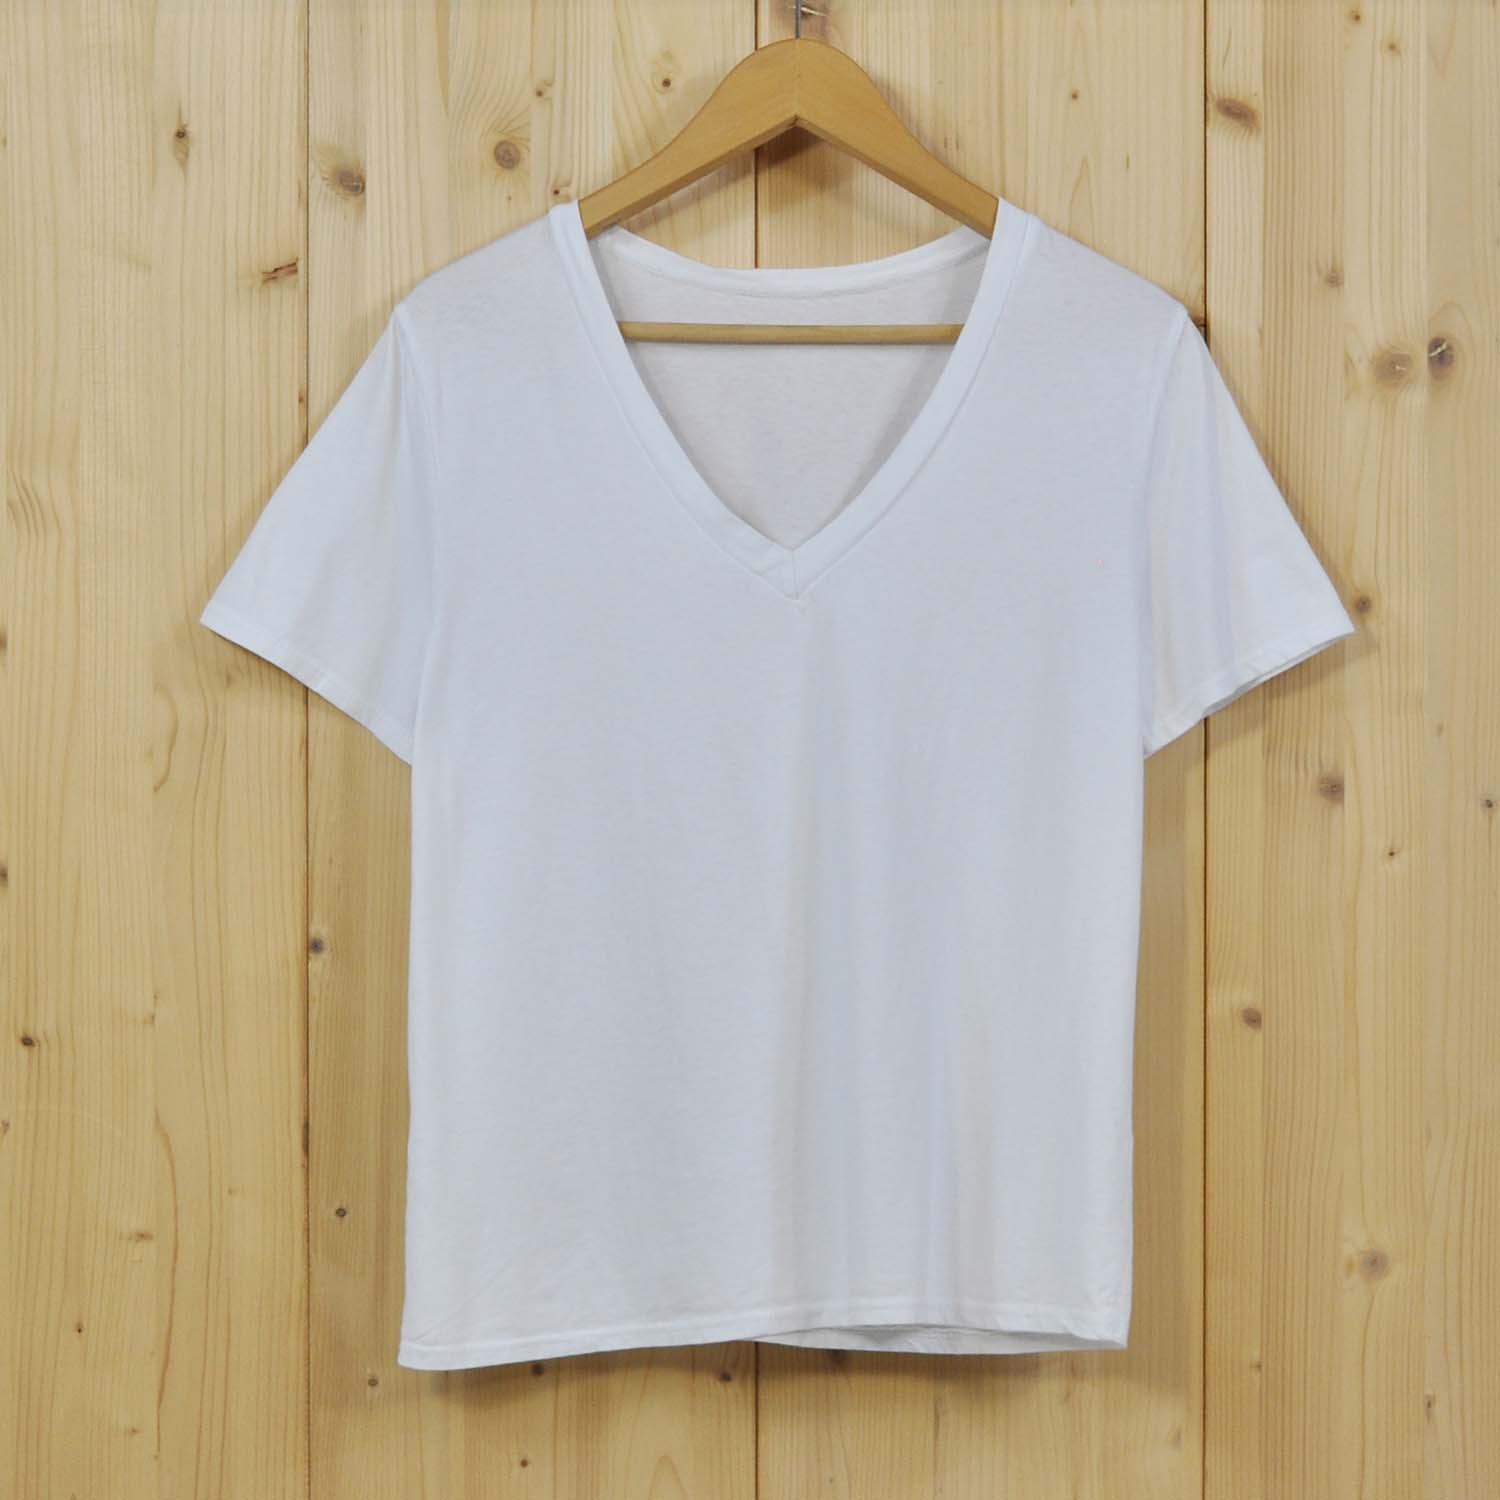 White básic T-shirt